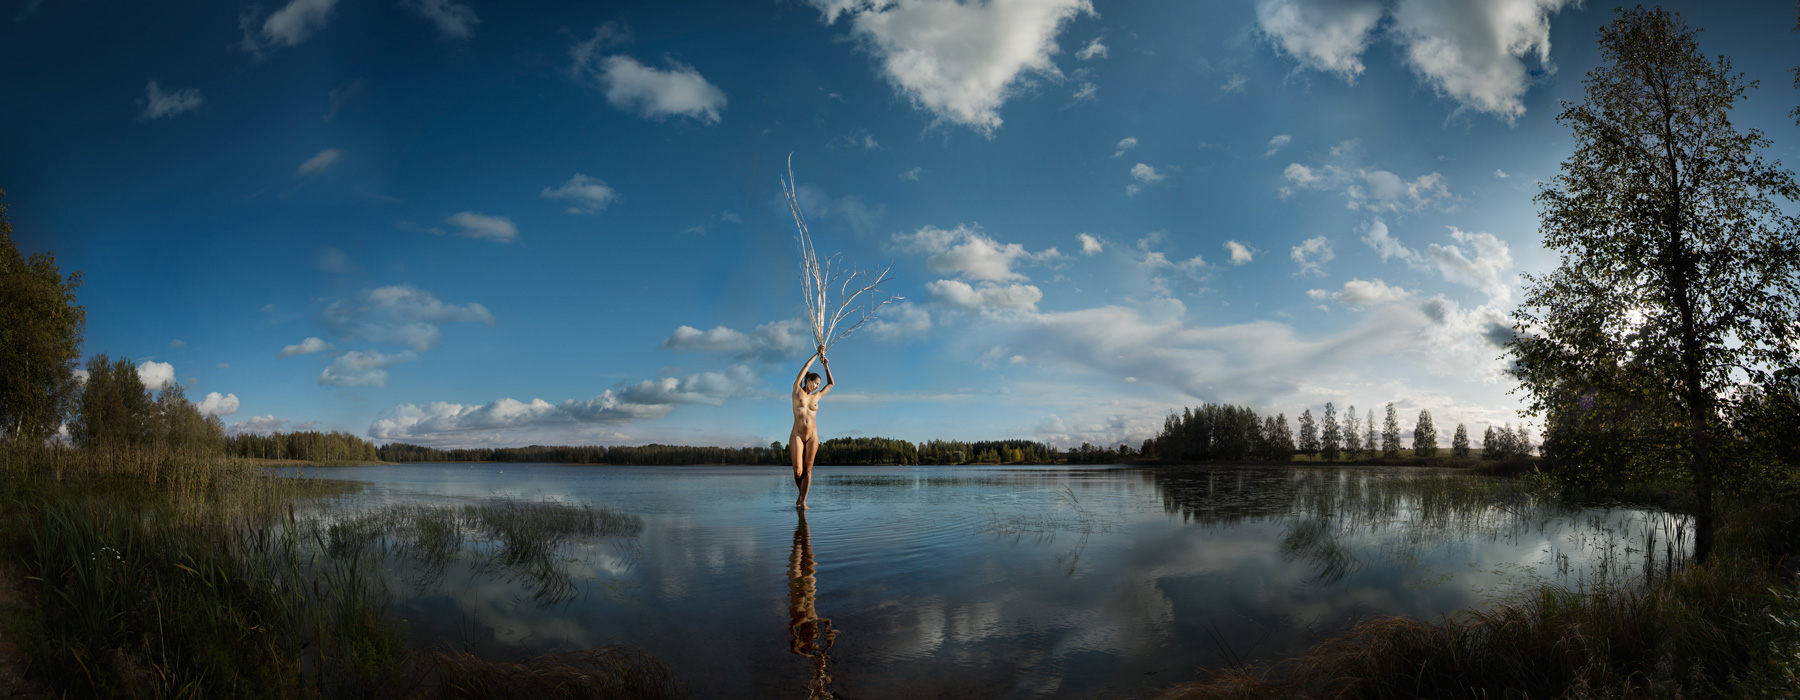 KÄÄNNA JUURI VI. Fotografía y retoque digital. Lago Heinijarvi, Hämeenkyrö, Finlandia